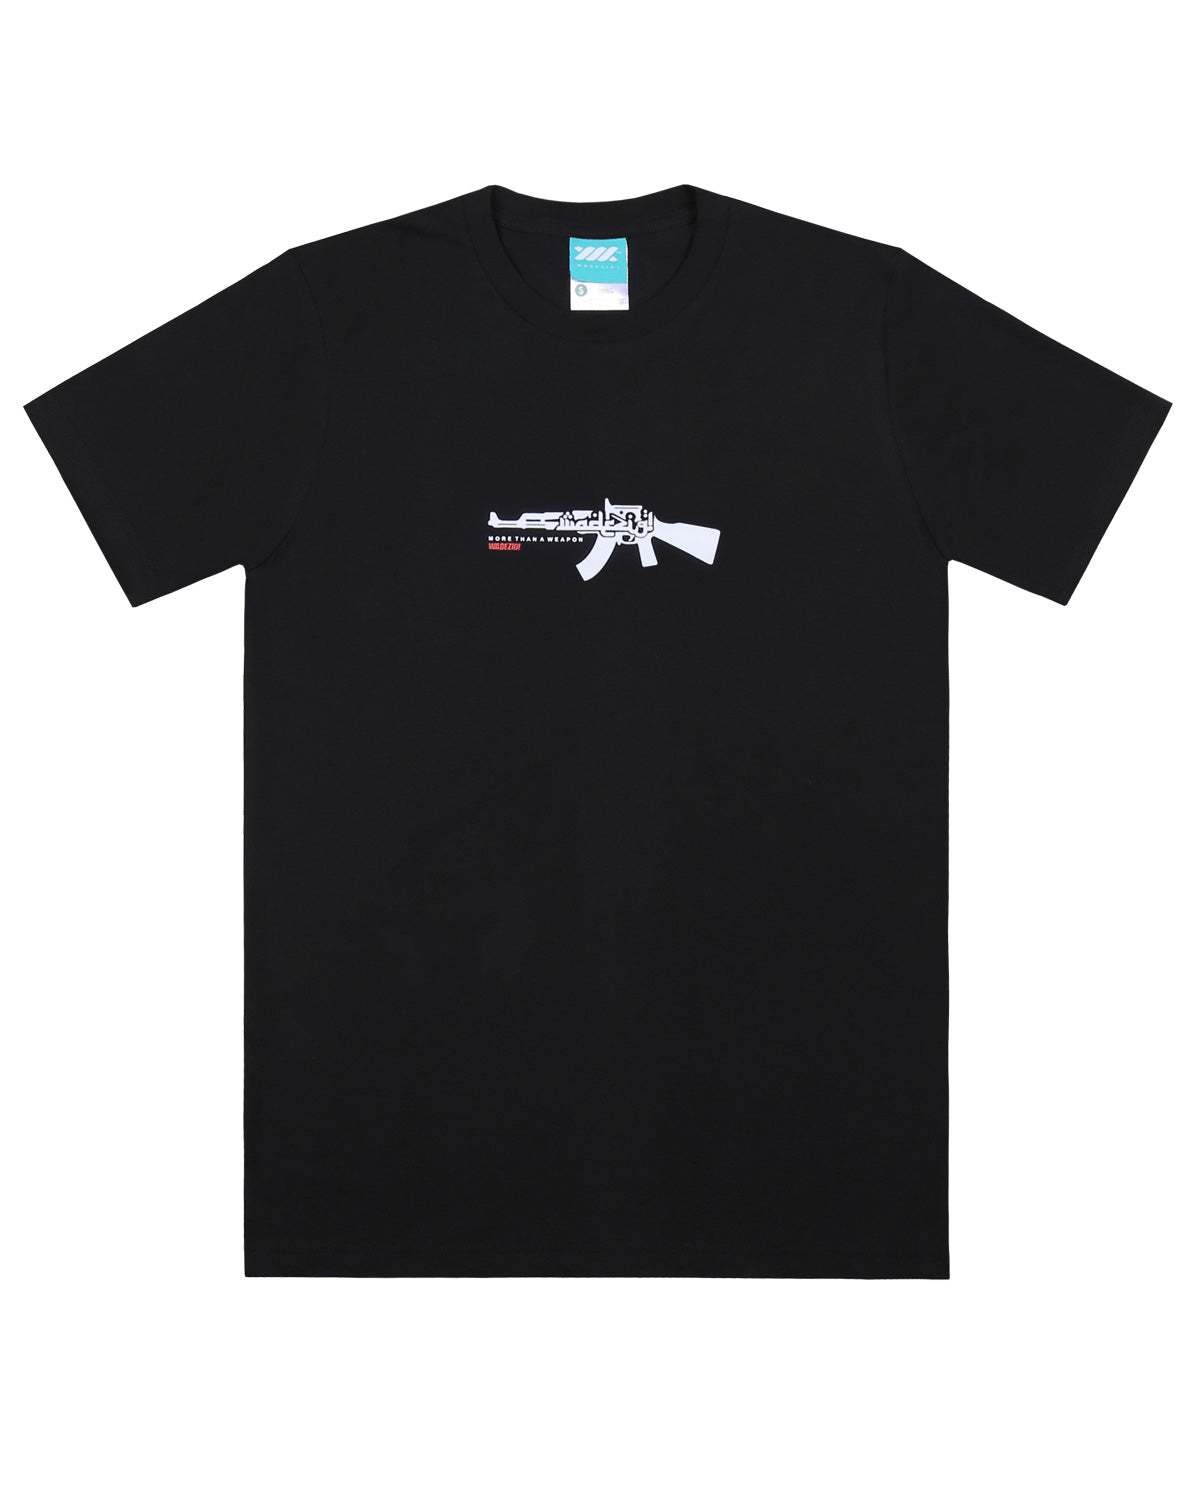 Wadezig! T-Shirt - Weapon Black